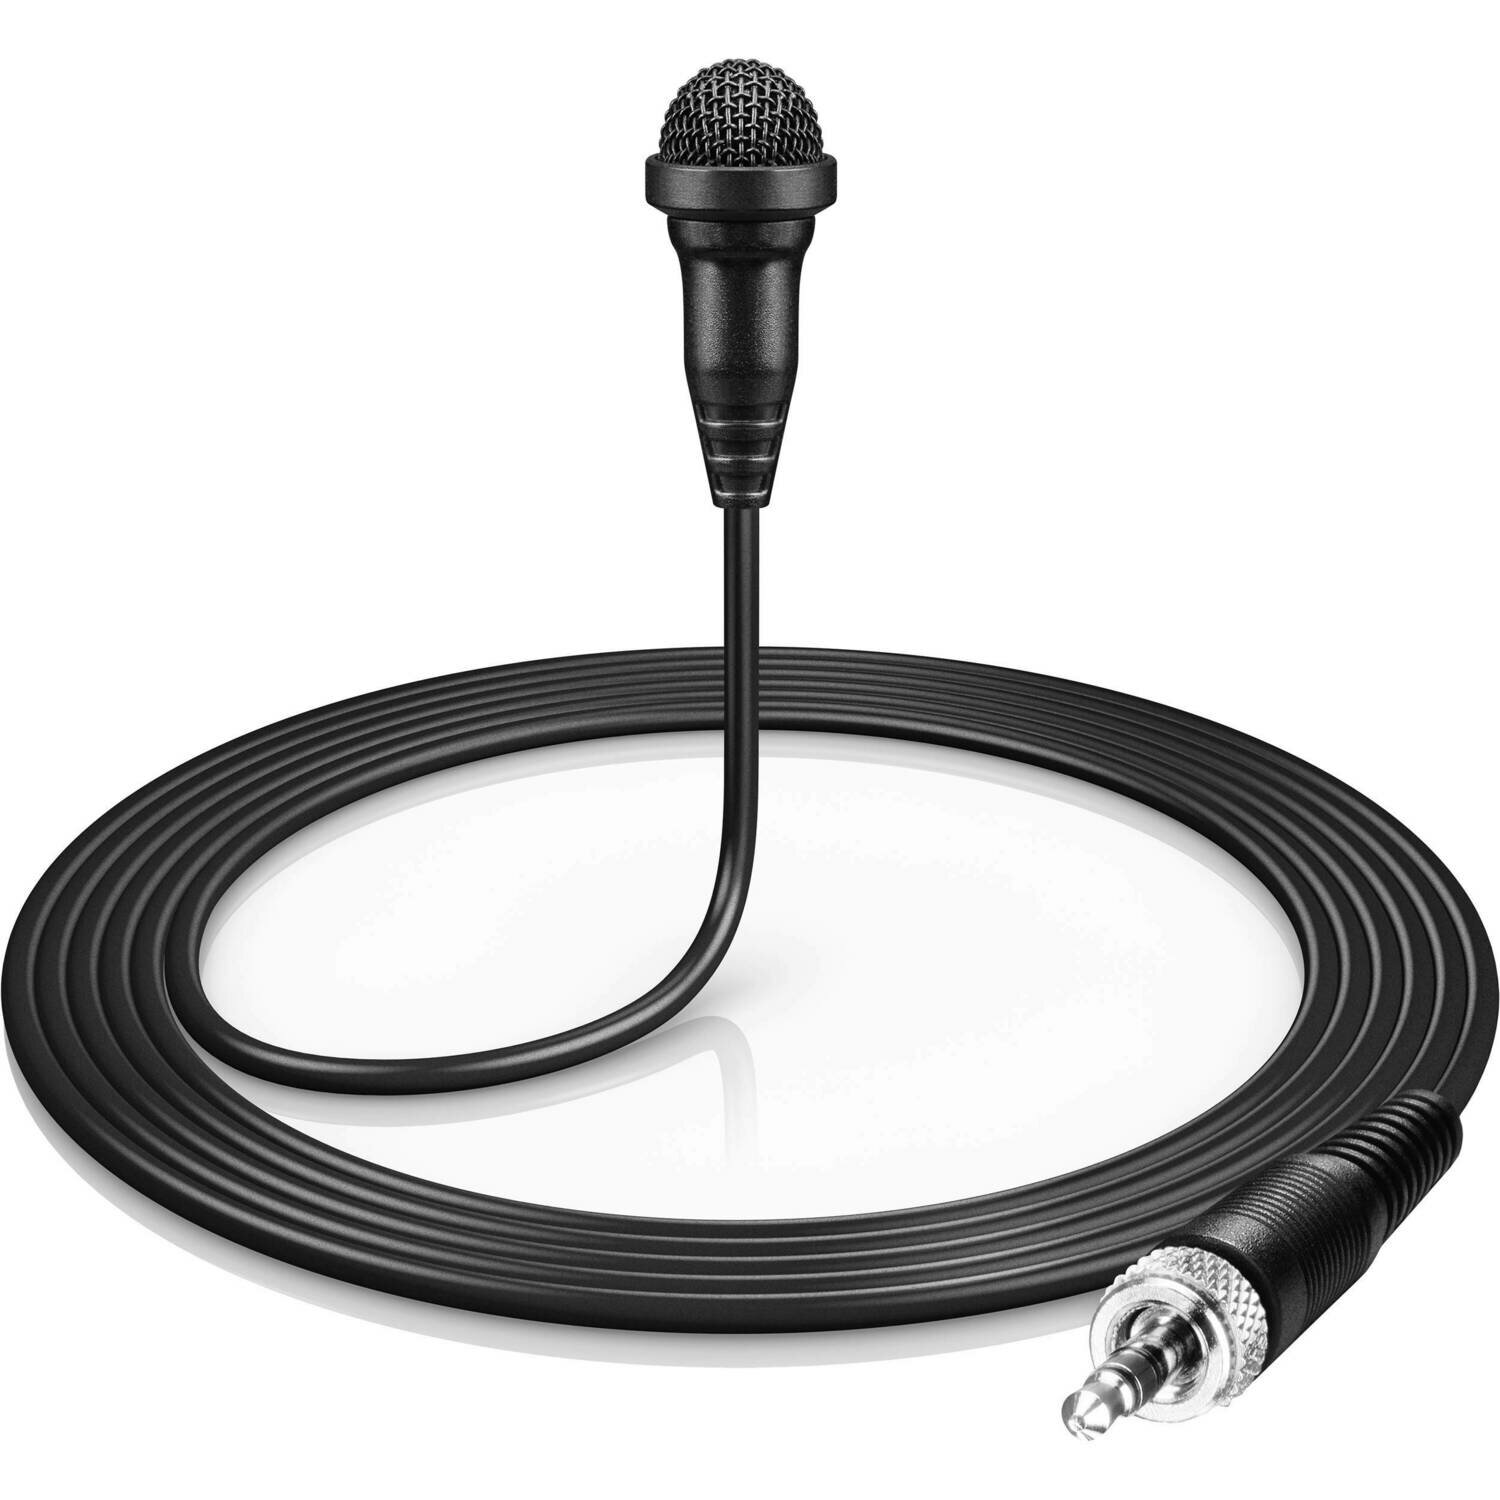 Sennheiser ME 2-II Omnidirectional Lavalier Microphone (Black)
#SEME2II MFR #ME2-II